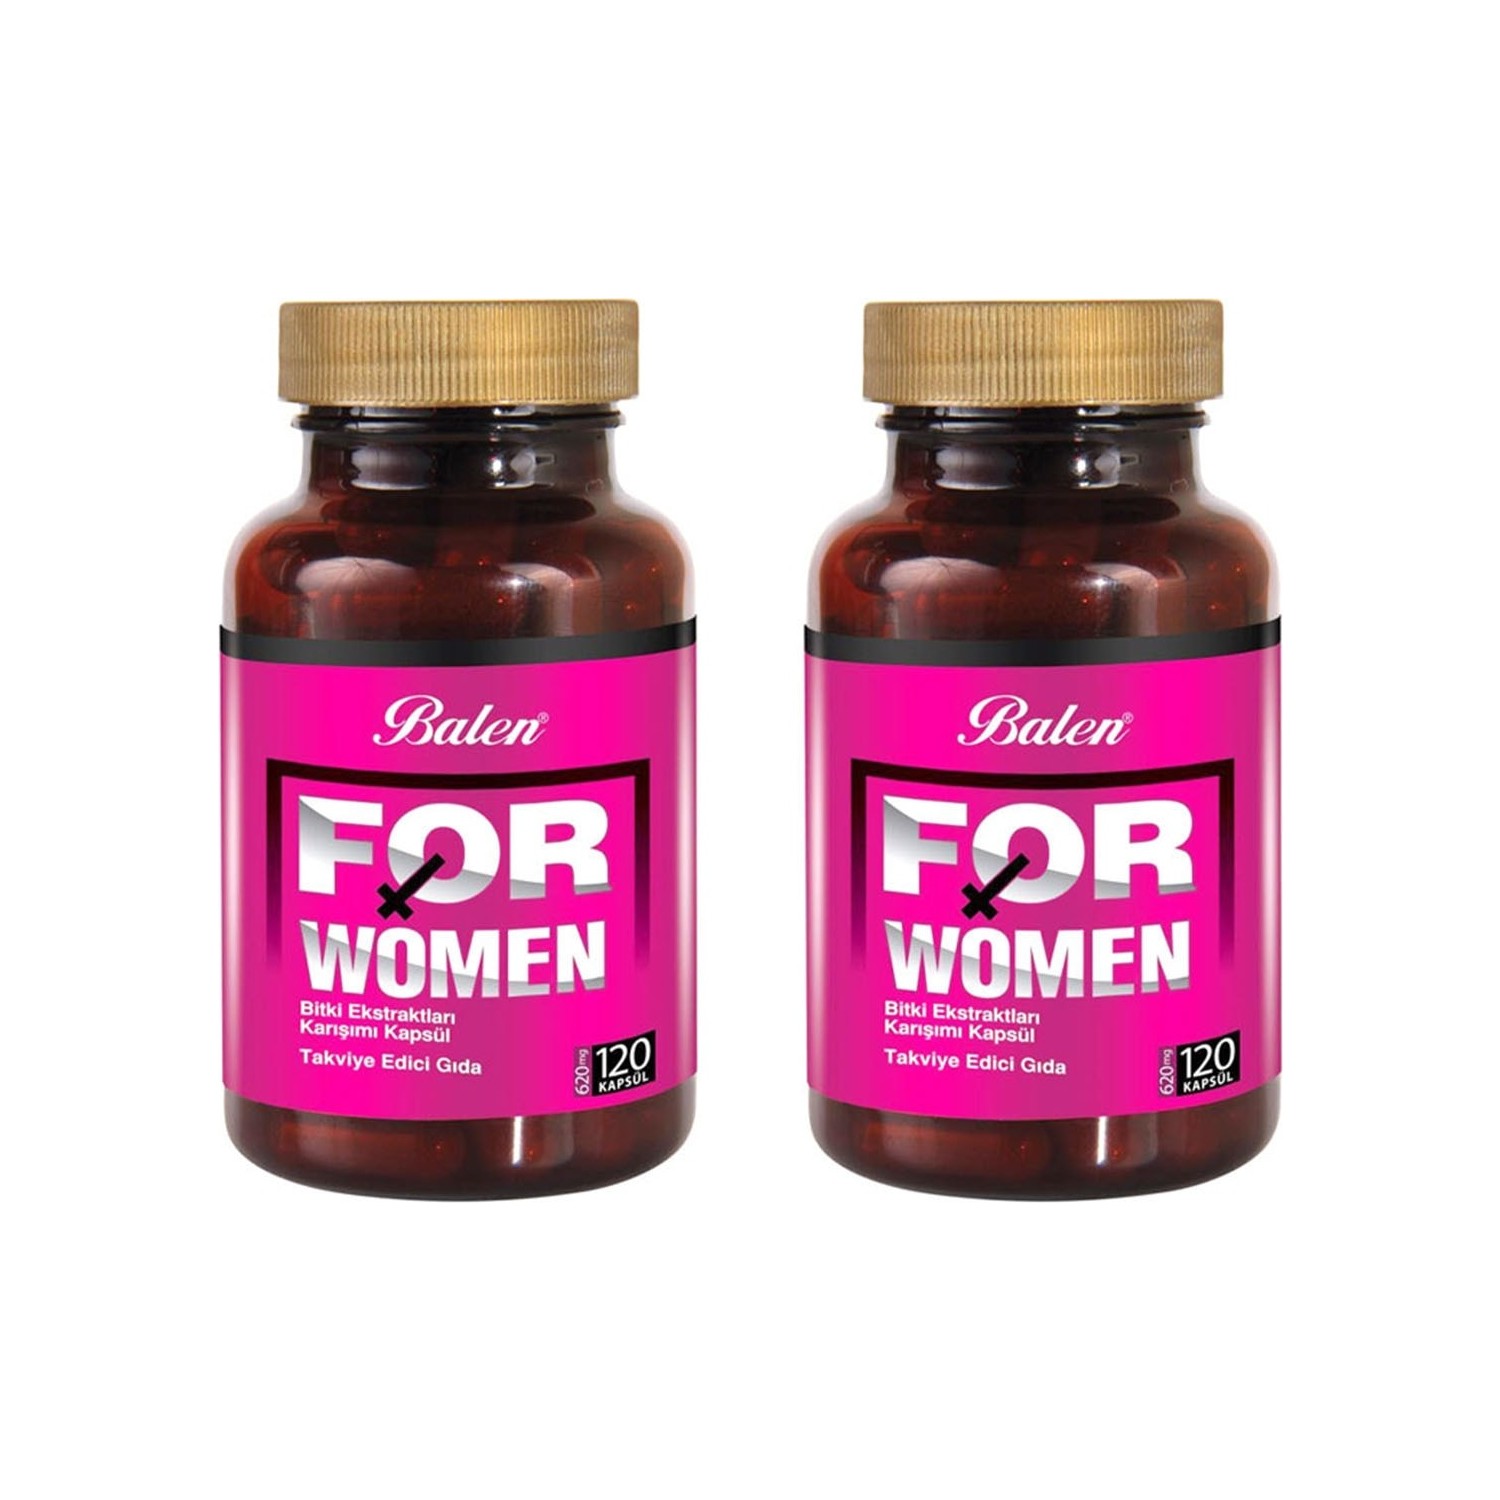 Пищевая добавка Balen комплекс для женщин 620 мг, 2 упаковки по 120 капсул “for women” capsules for better health 120 capsules 620 mg